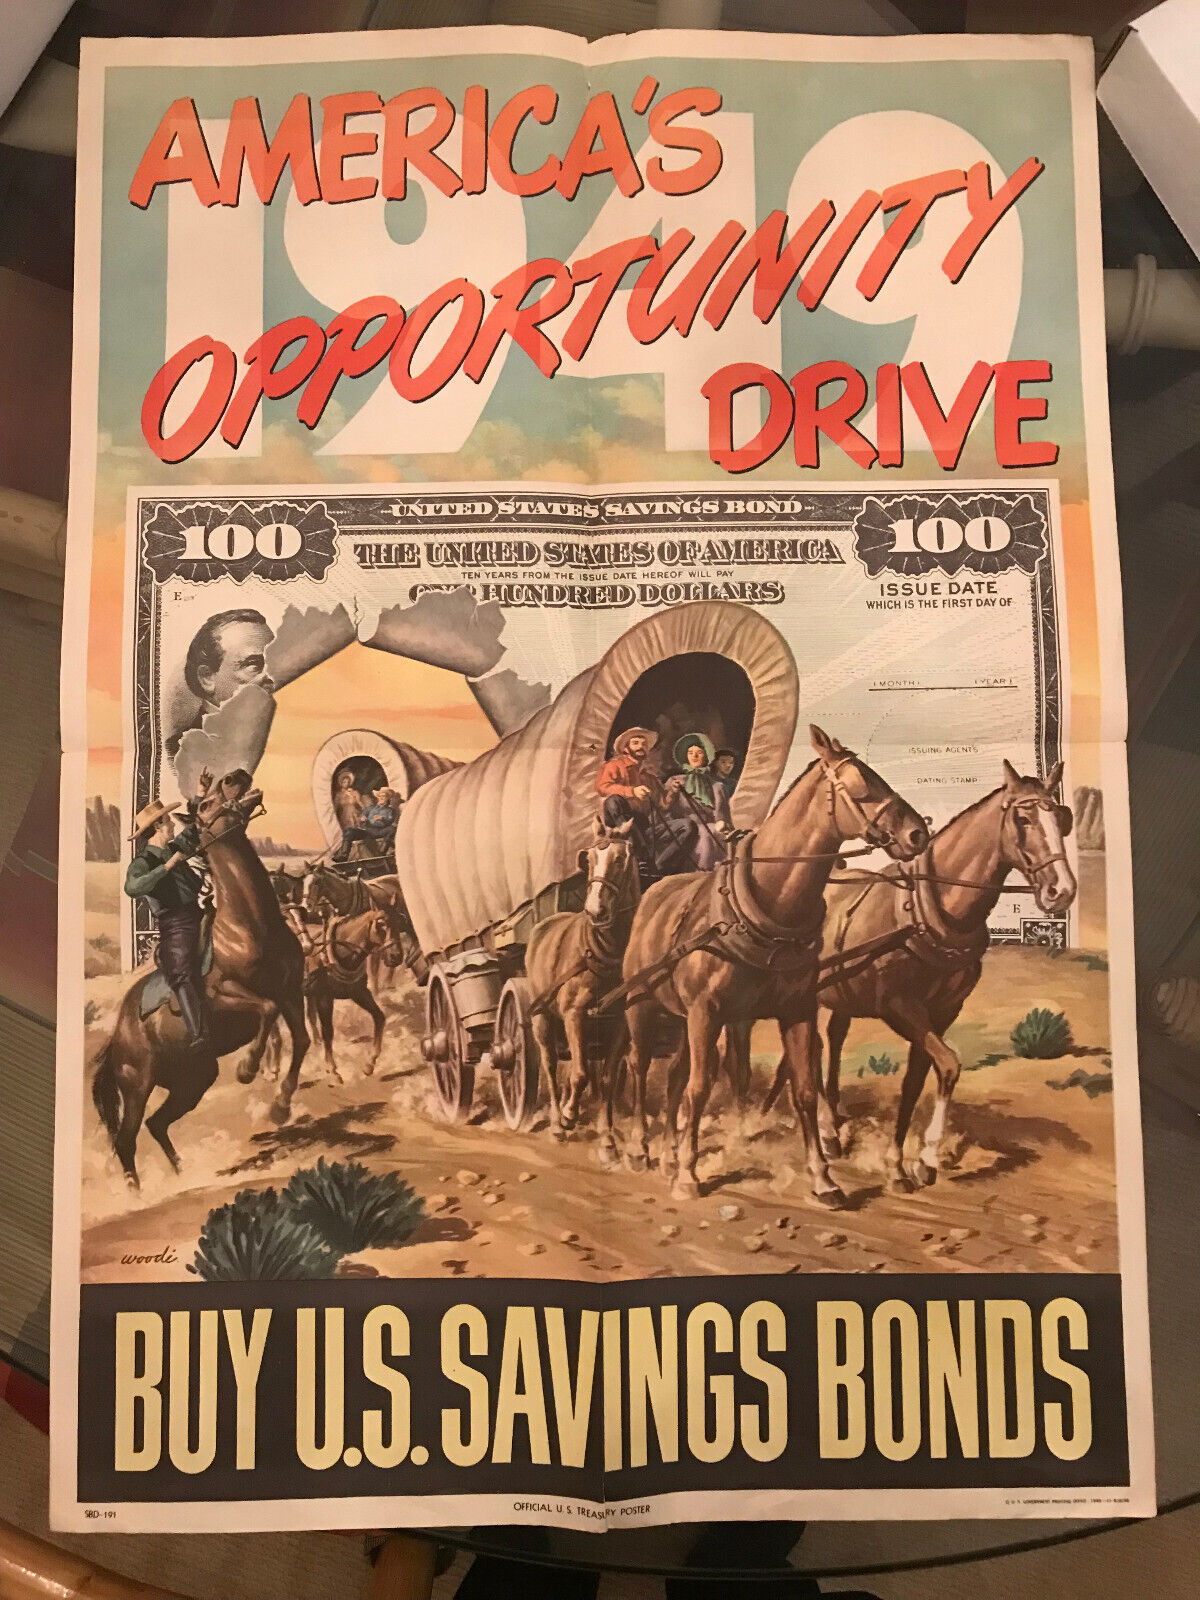 RARE VINTAGE 1949 America's Opportunity Drive - Buy U.S. Savings Bond Ad Poster